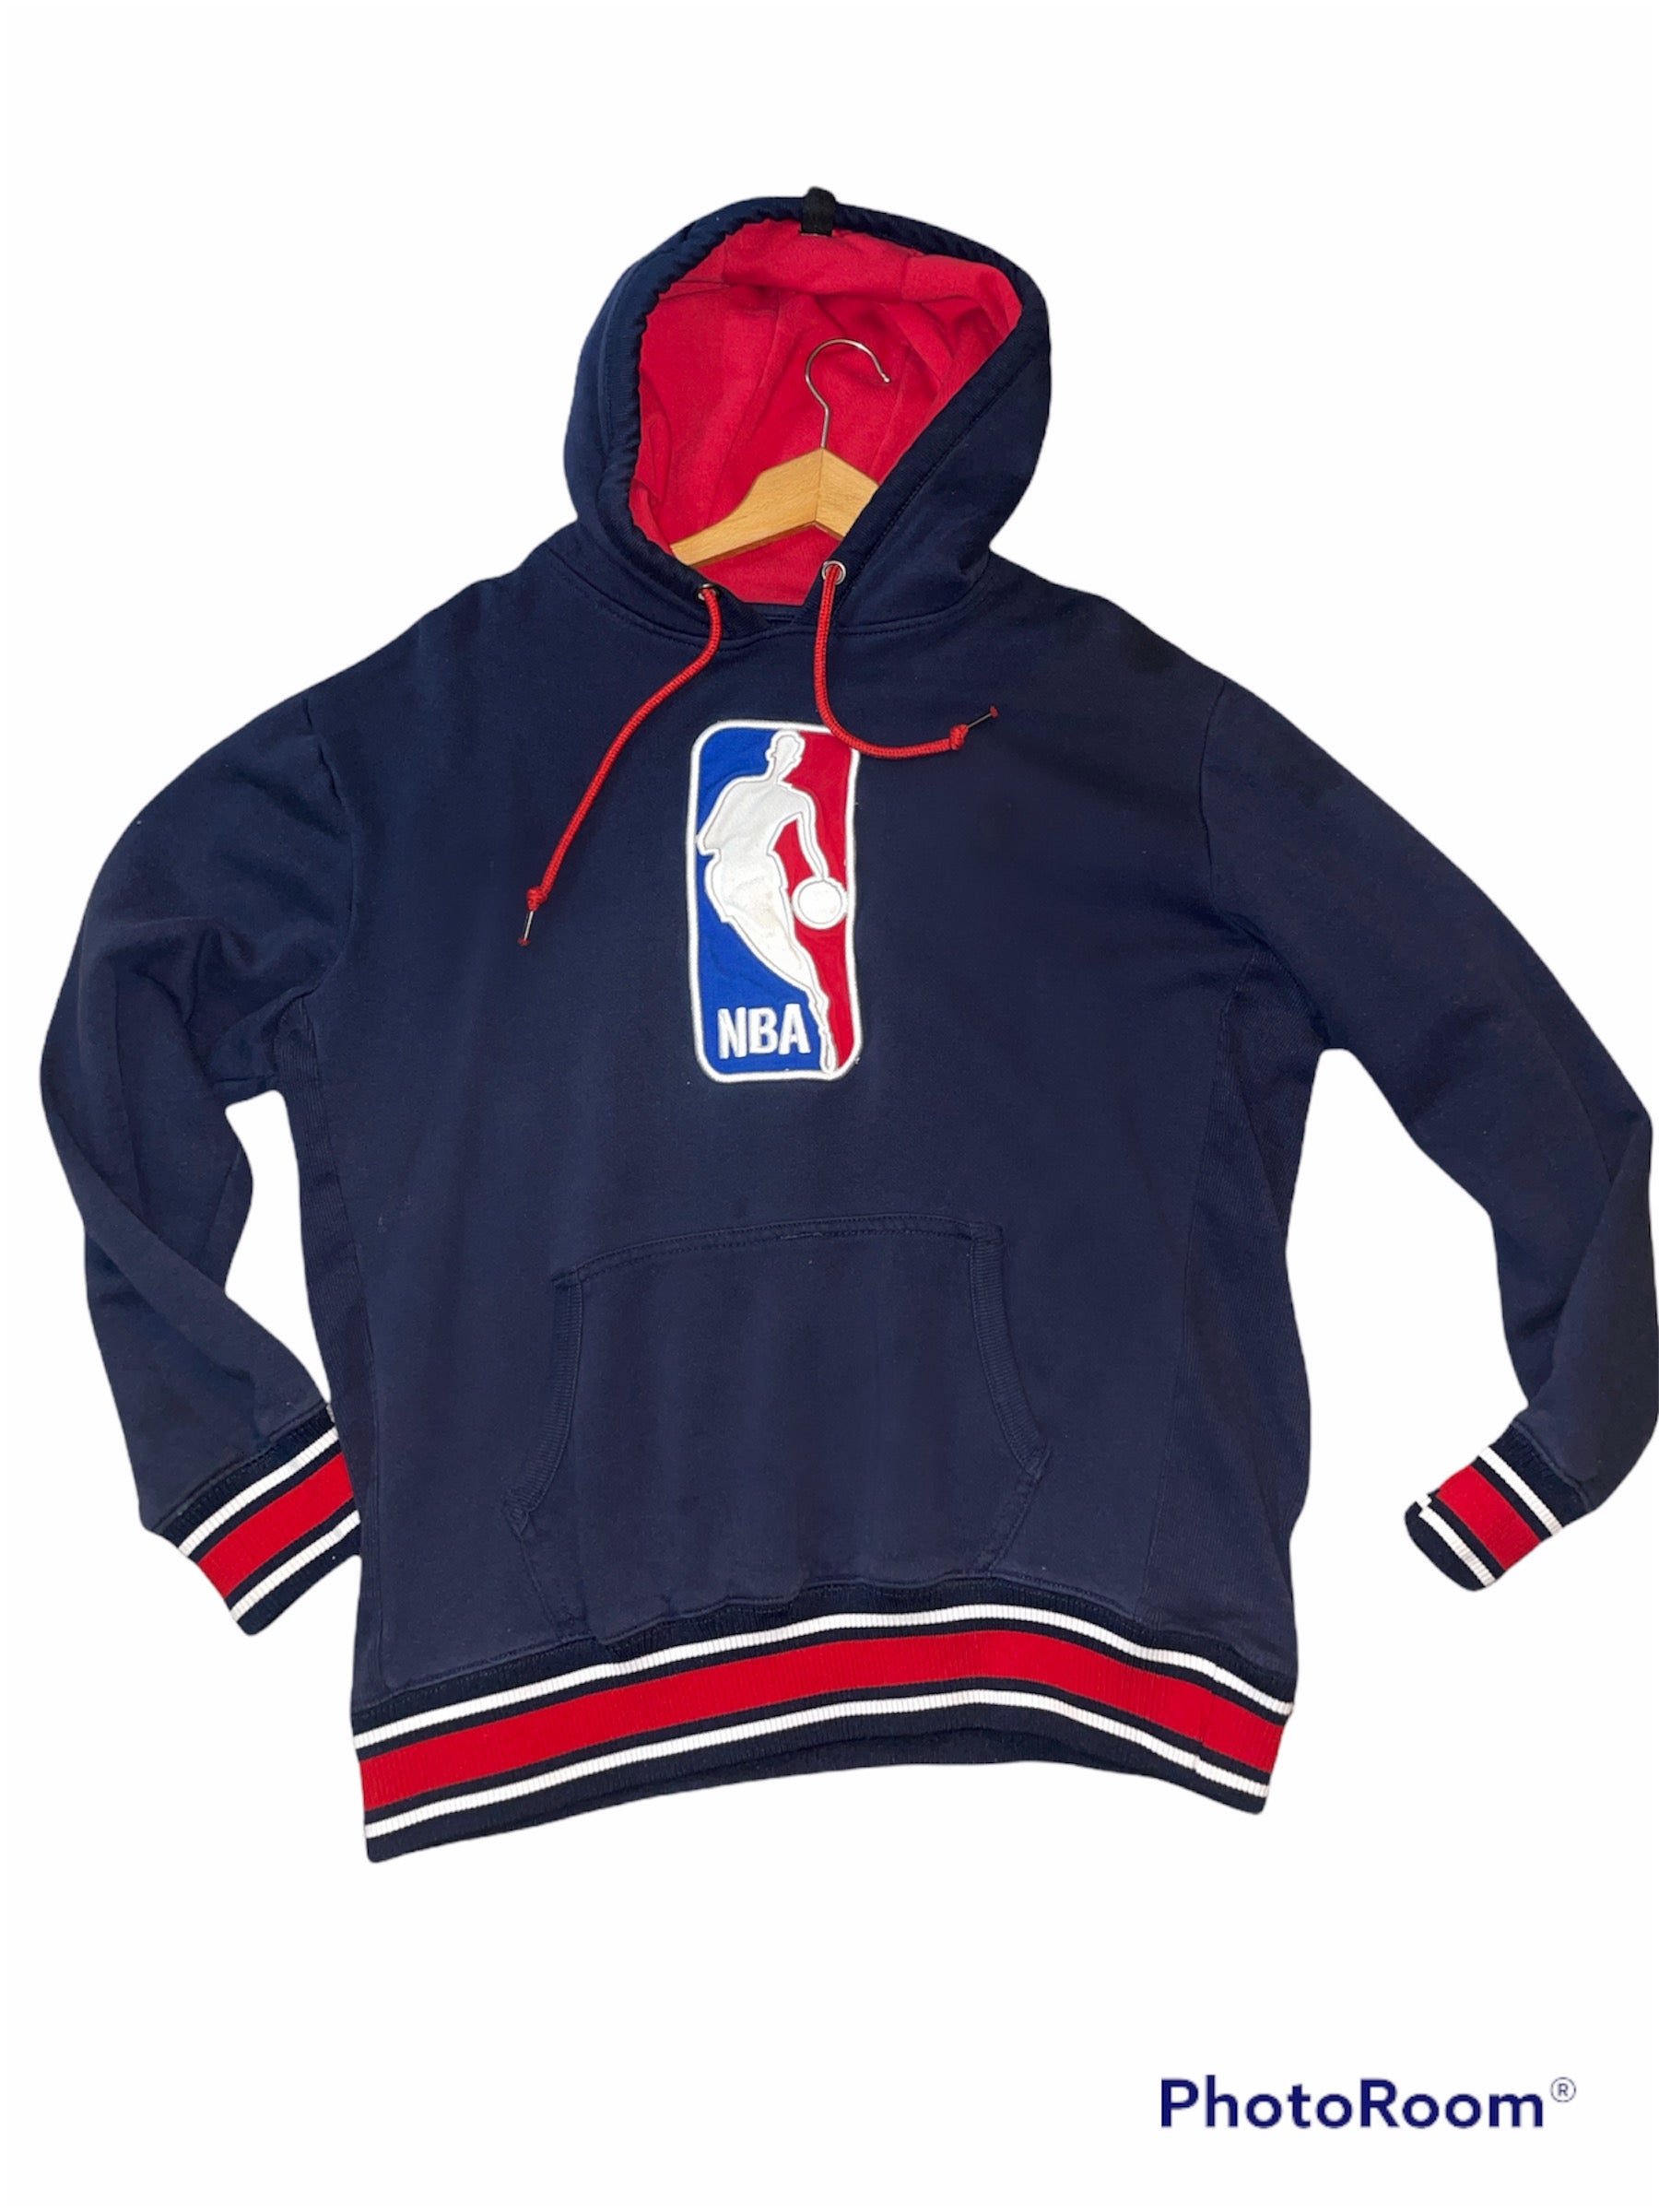 NBA Vintage Tees & Retro Fleece Hoodies